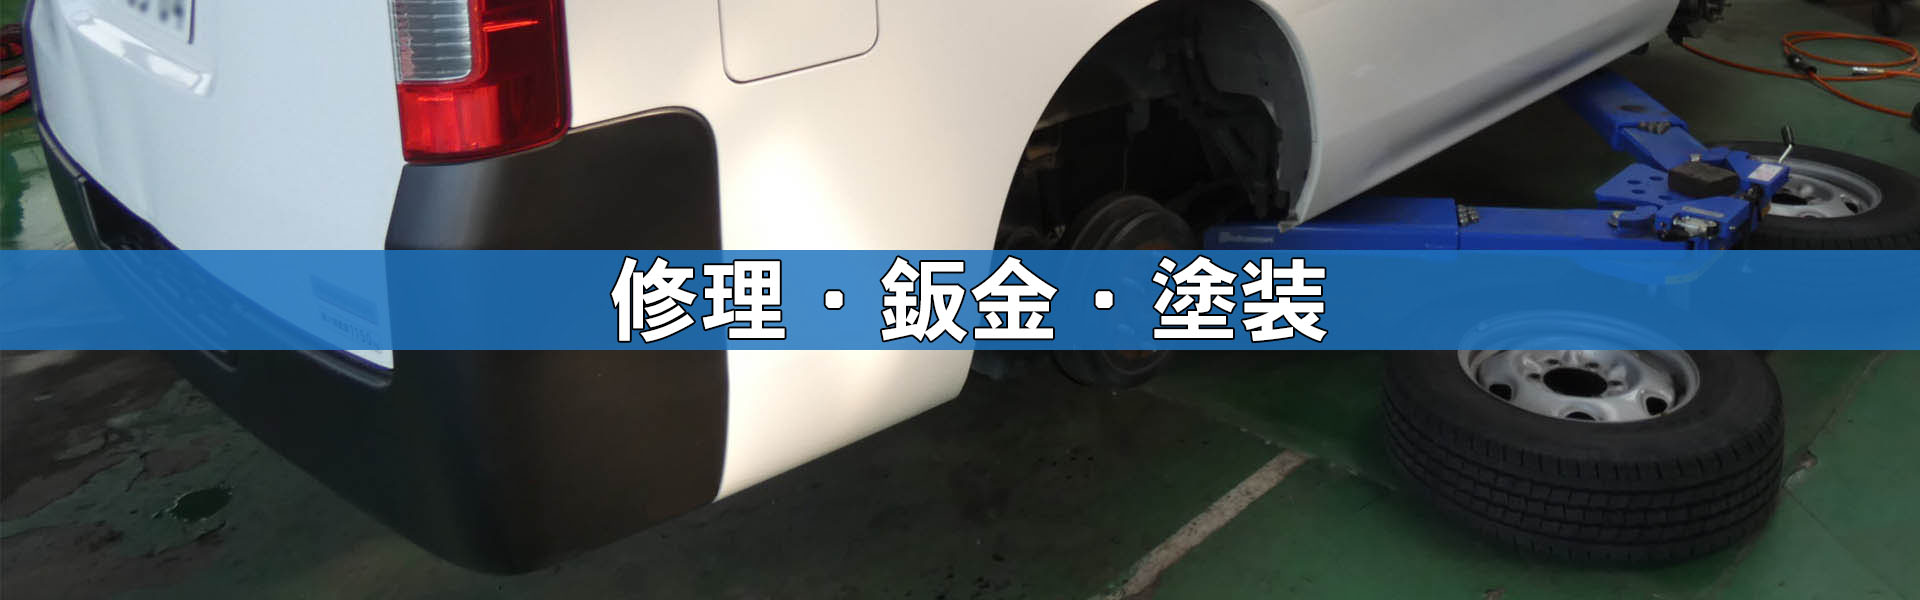 自動車修理、鈑金、塗装のご用命は埼玉県狭山市・粕谷自動車へ